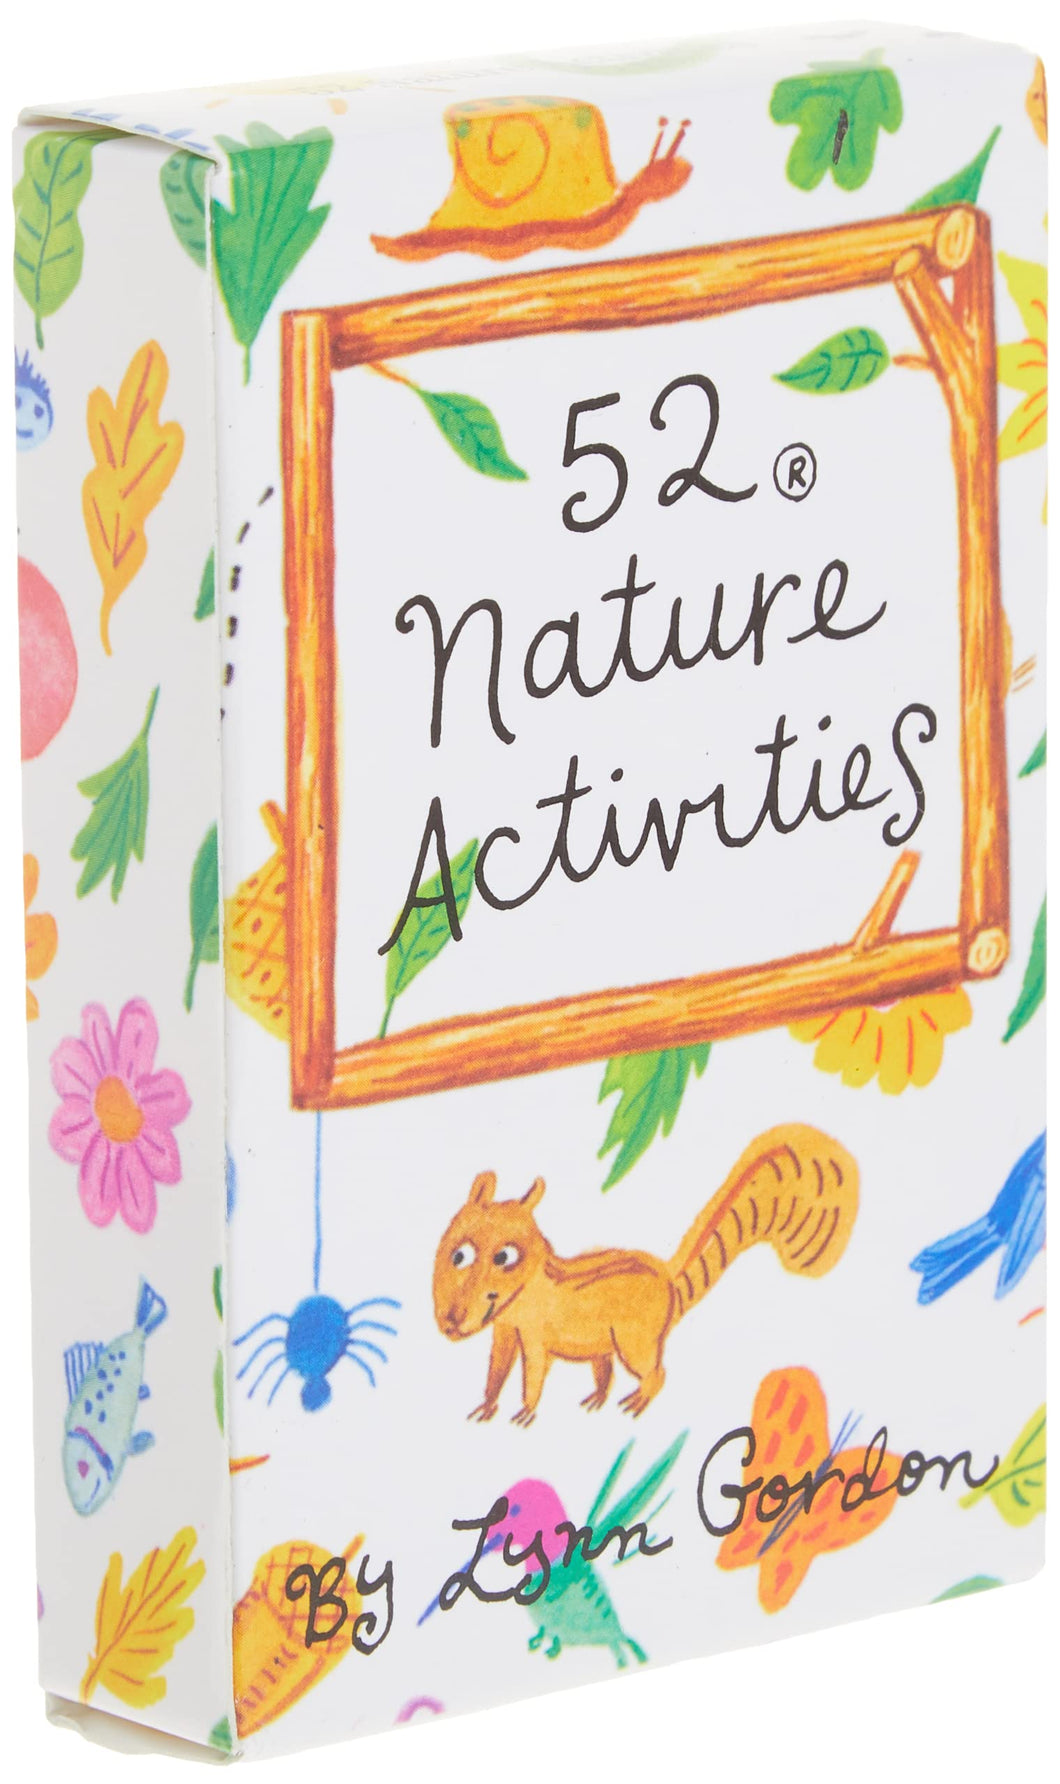 52 Activities in Nature Cards [Lynn Gordon & Karen Johnson]